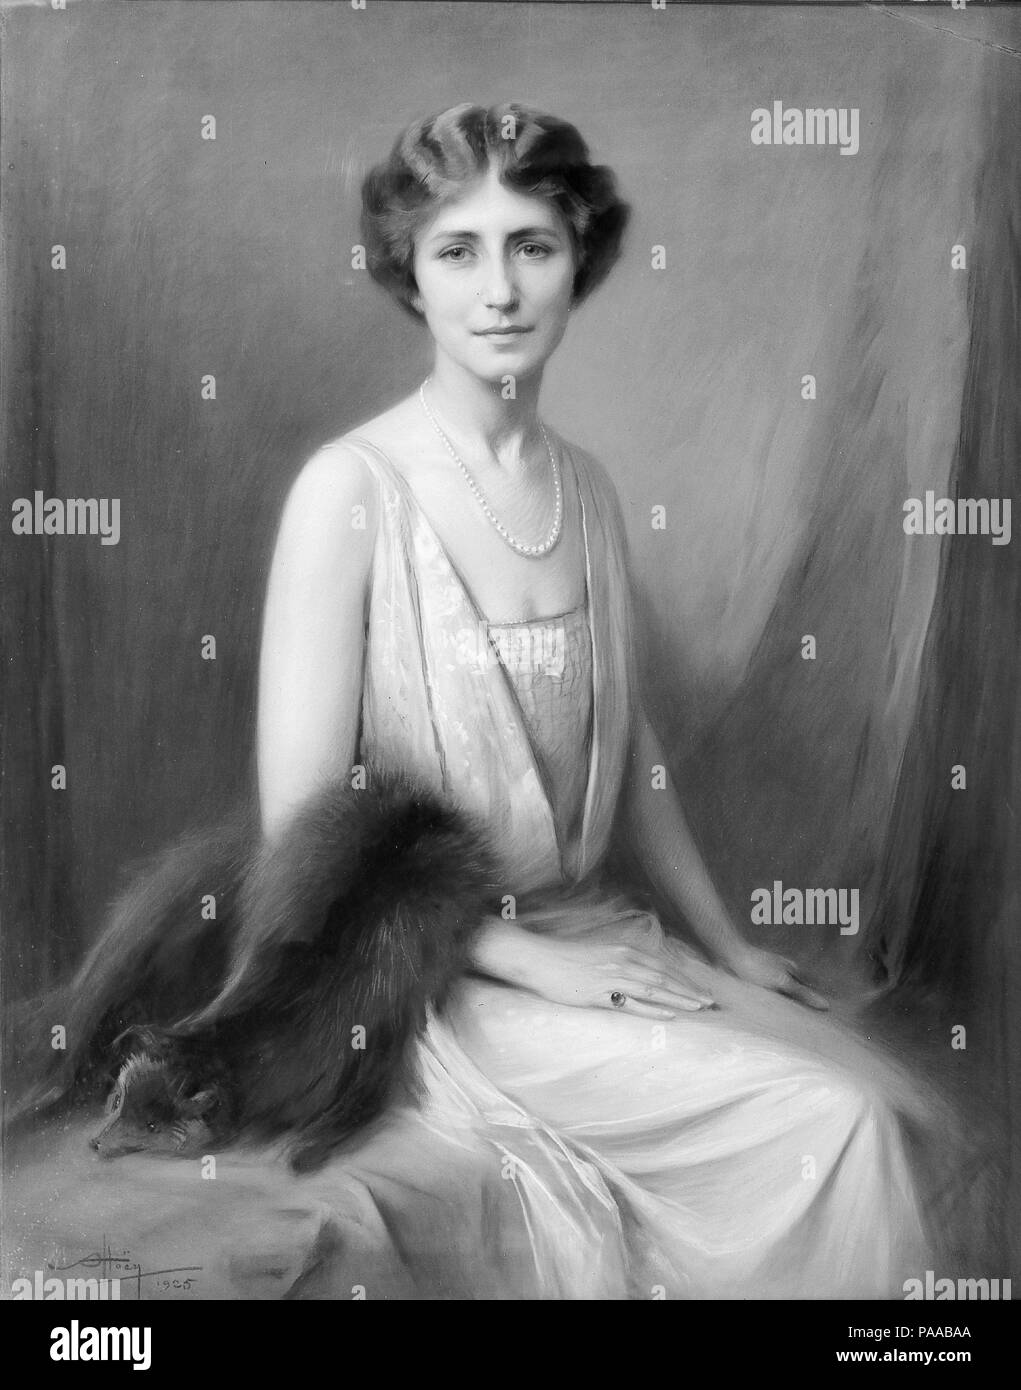 Emma Alexander Sheafer (1891-1973). Artist: Hoëy(?) (active 1925). Dimensions: 44 3/8 x 34 3/8 in. (112.7 x 87.3 cm). Date: 1925. Museum: Metropolitan Museum of Art, New York, USA. Stock Photo